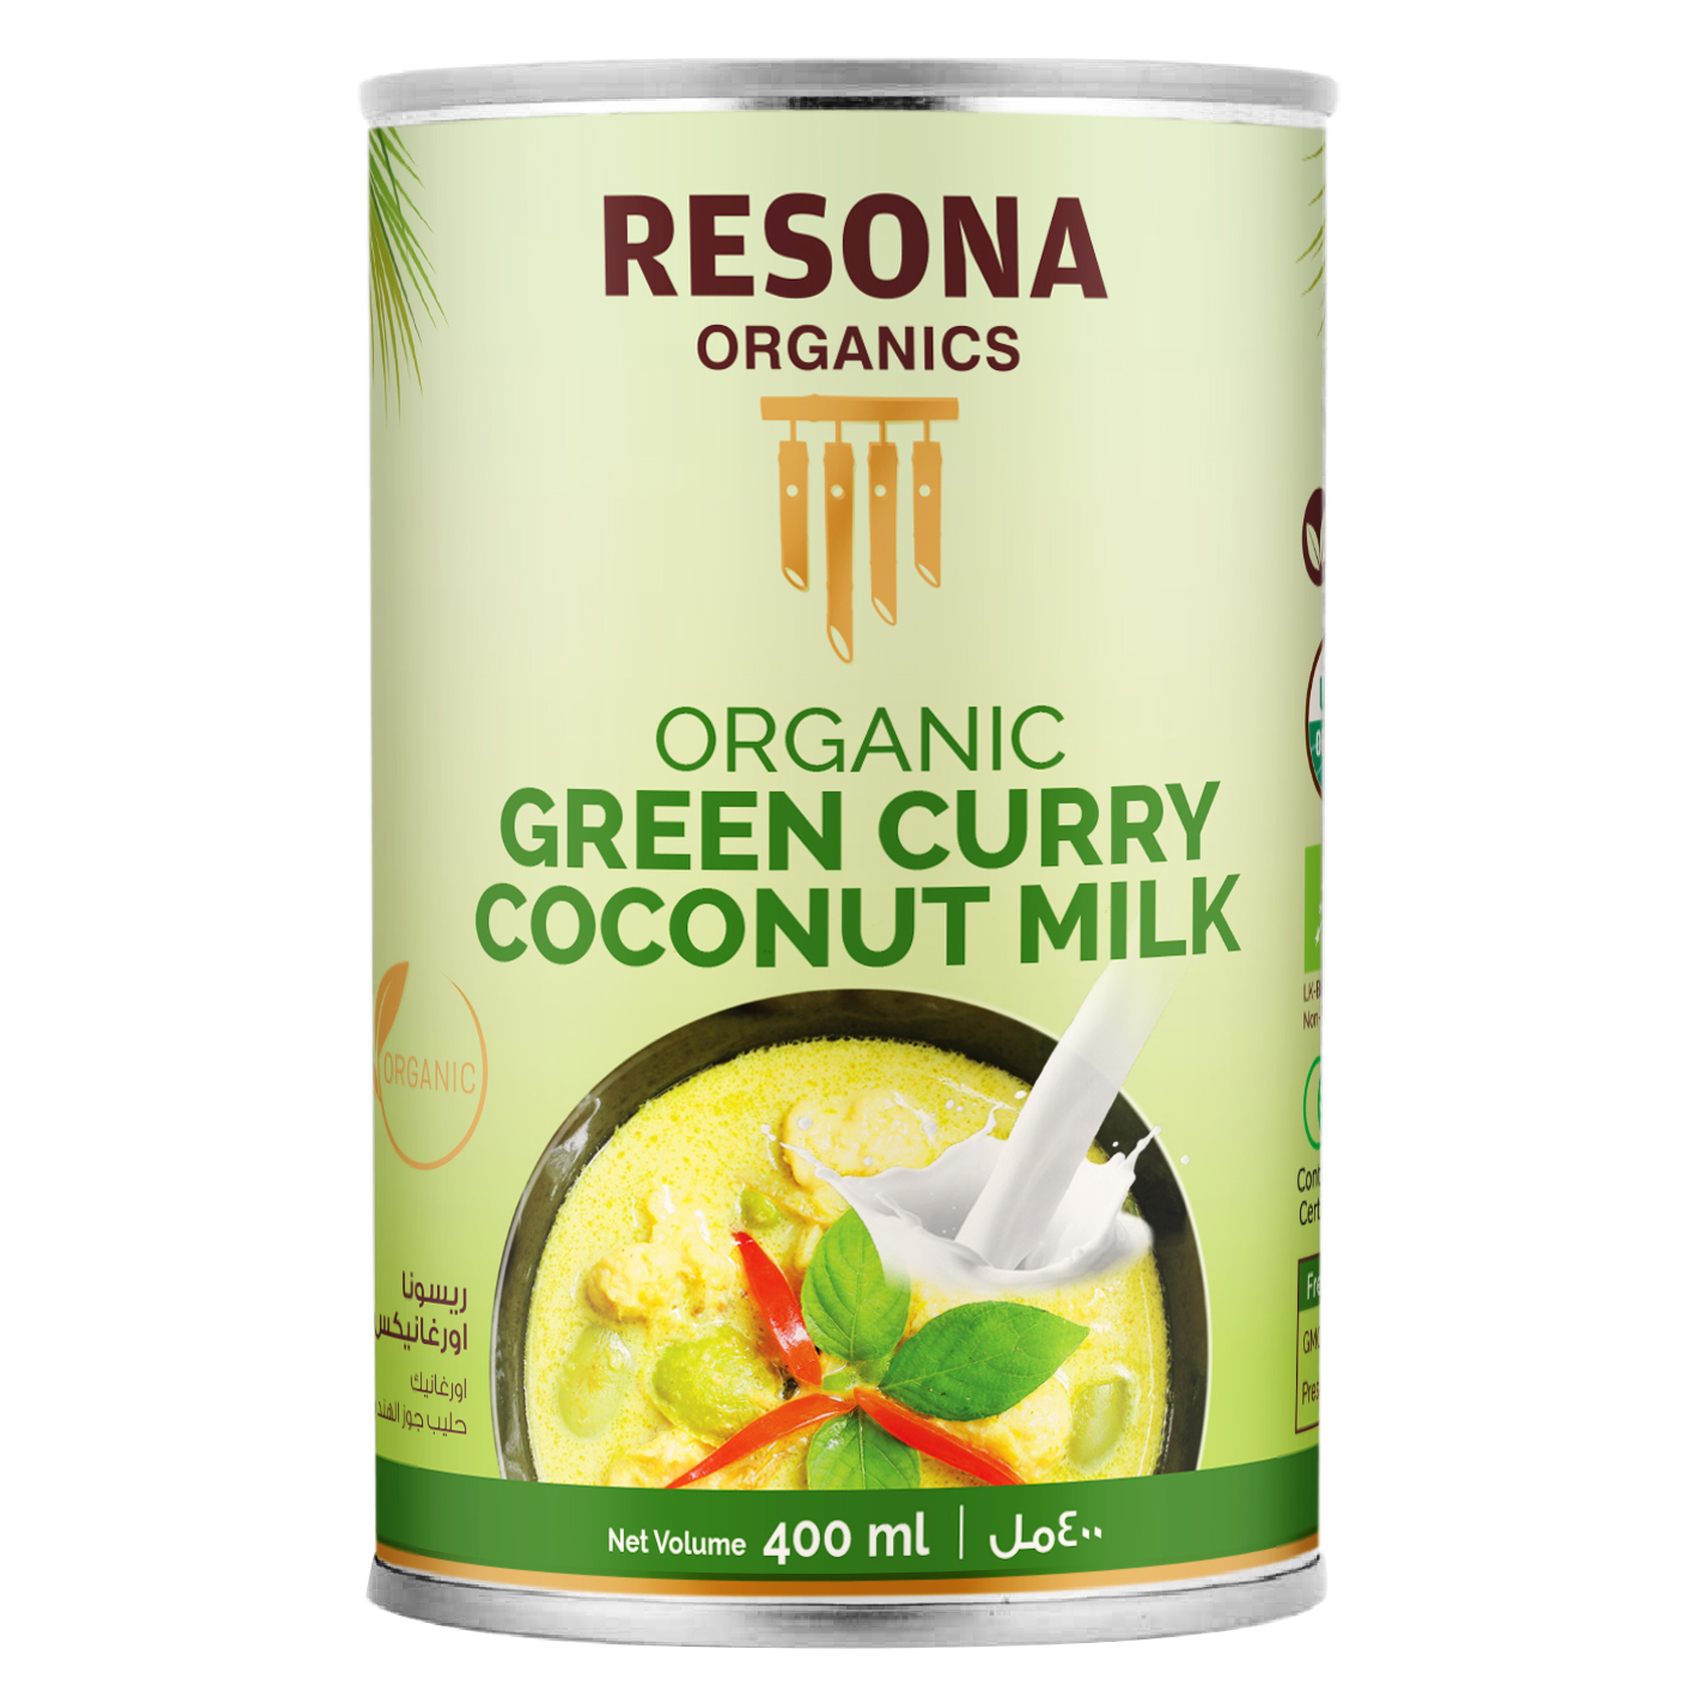 Resona Organics Organic Green Curry Coconut Milk 400ml